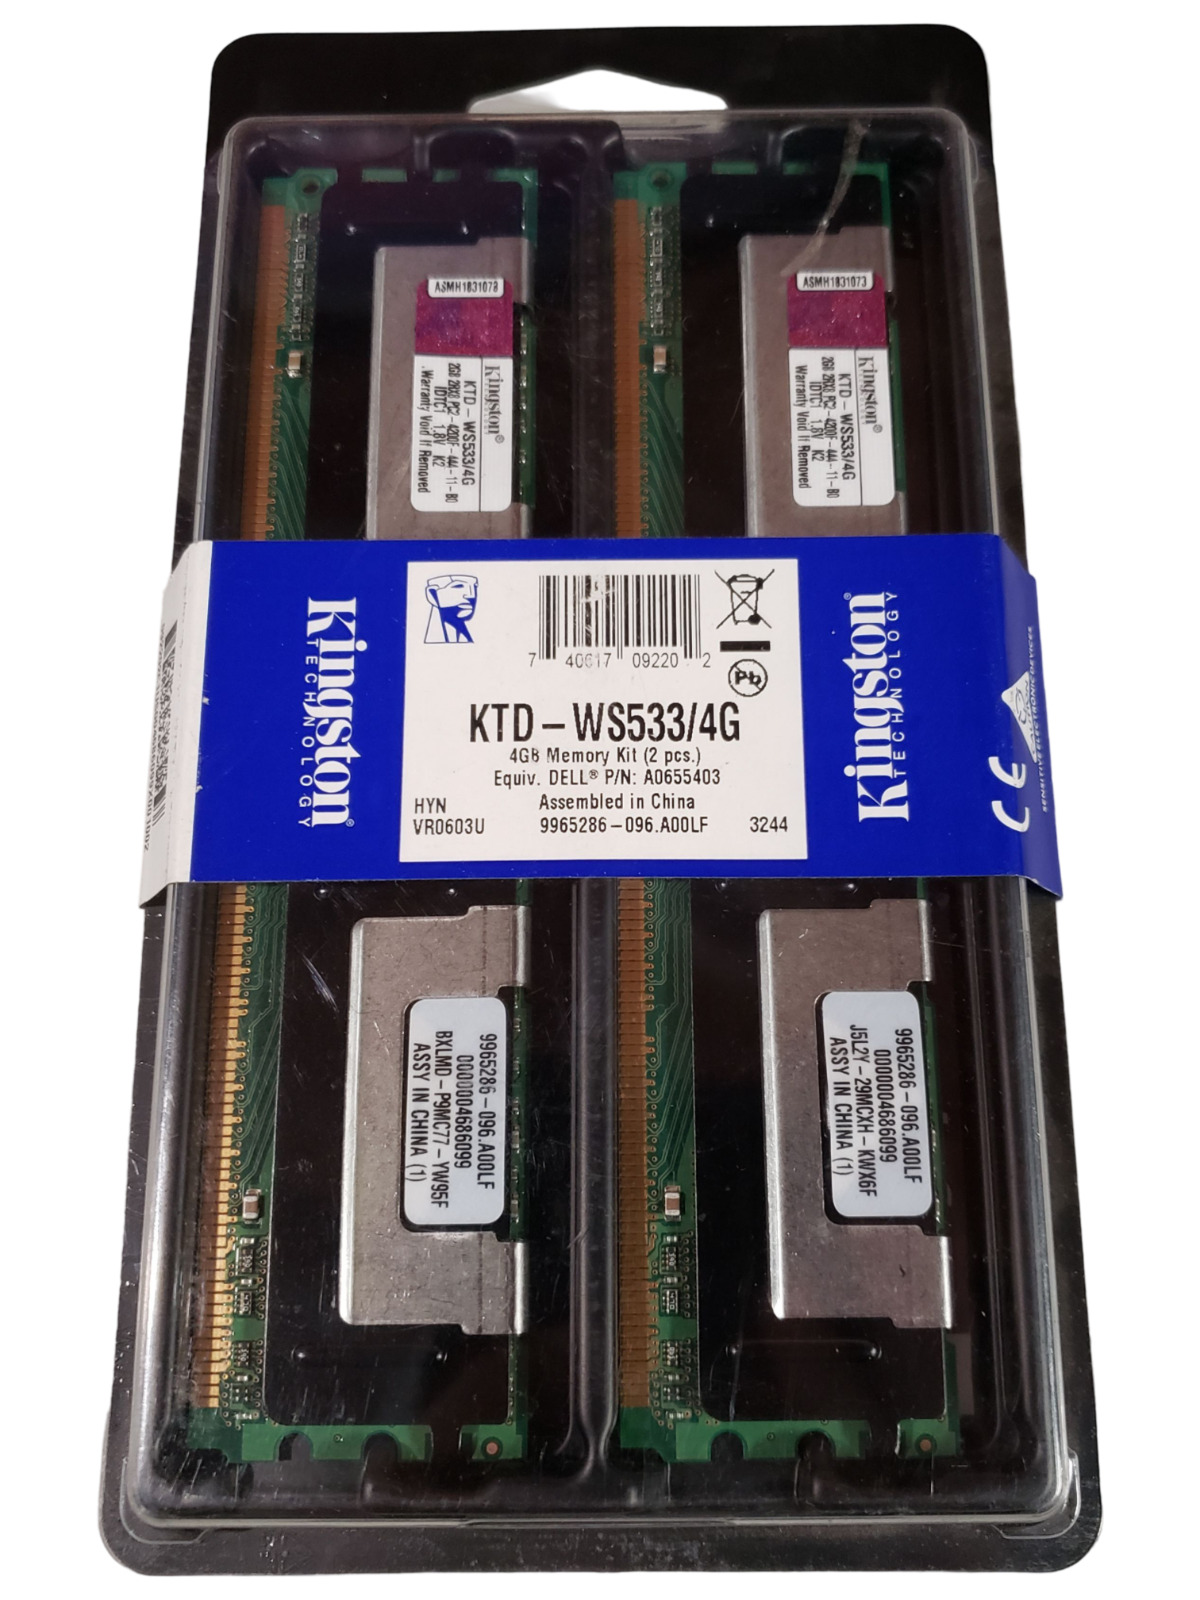 NEW SEALED Kingston KTD-WS533/4G DDR2-533 4GB (2x2GB) Memory